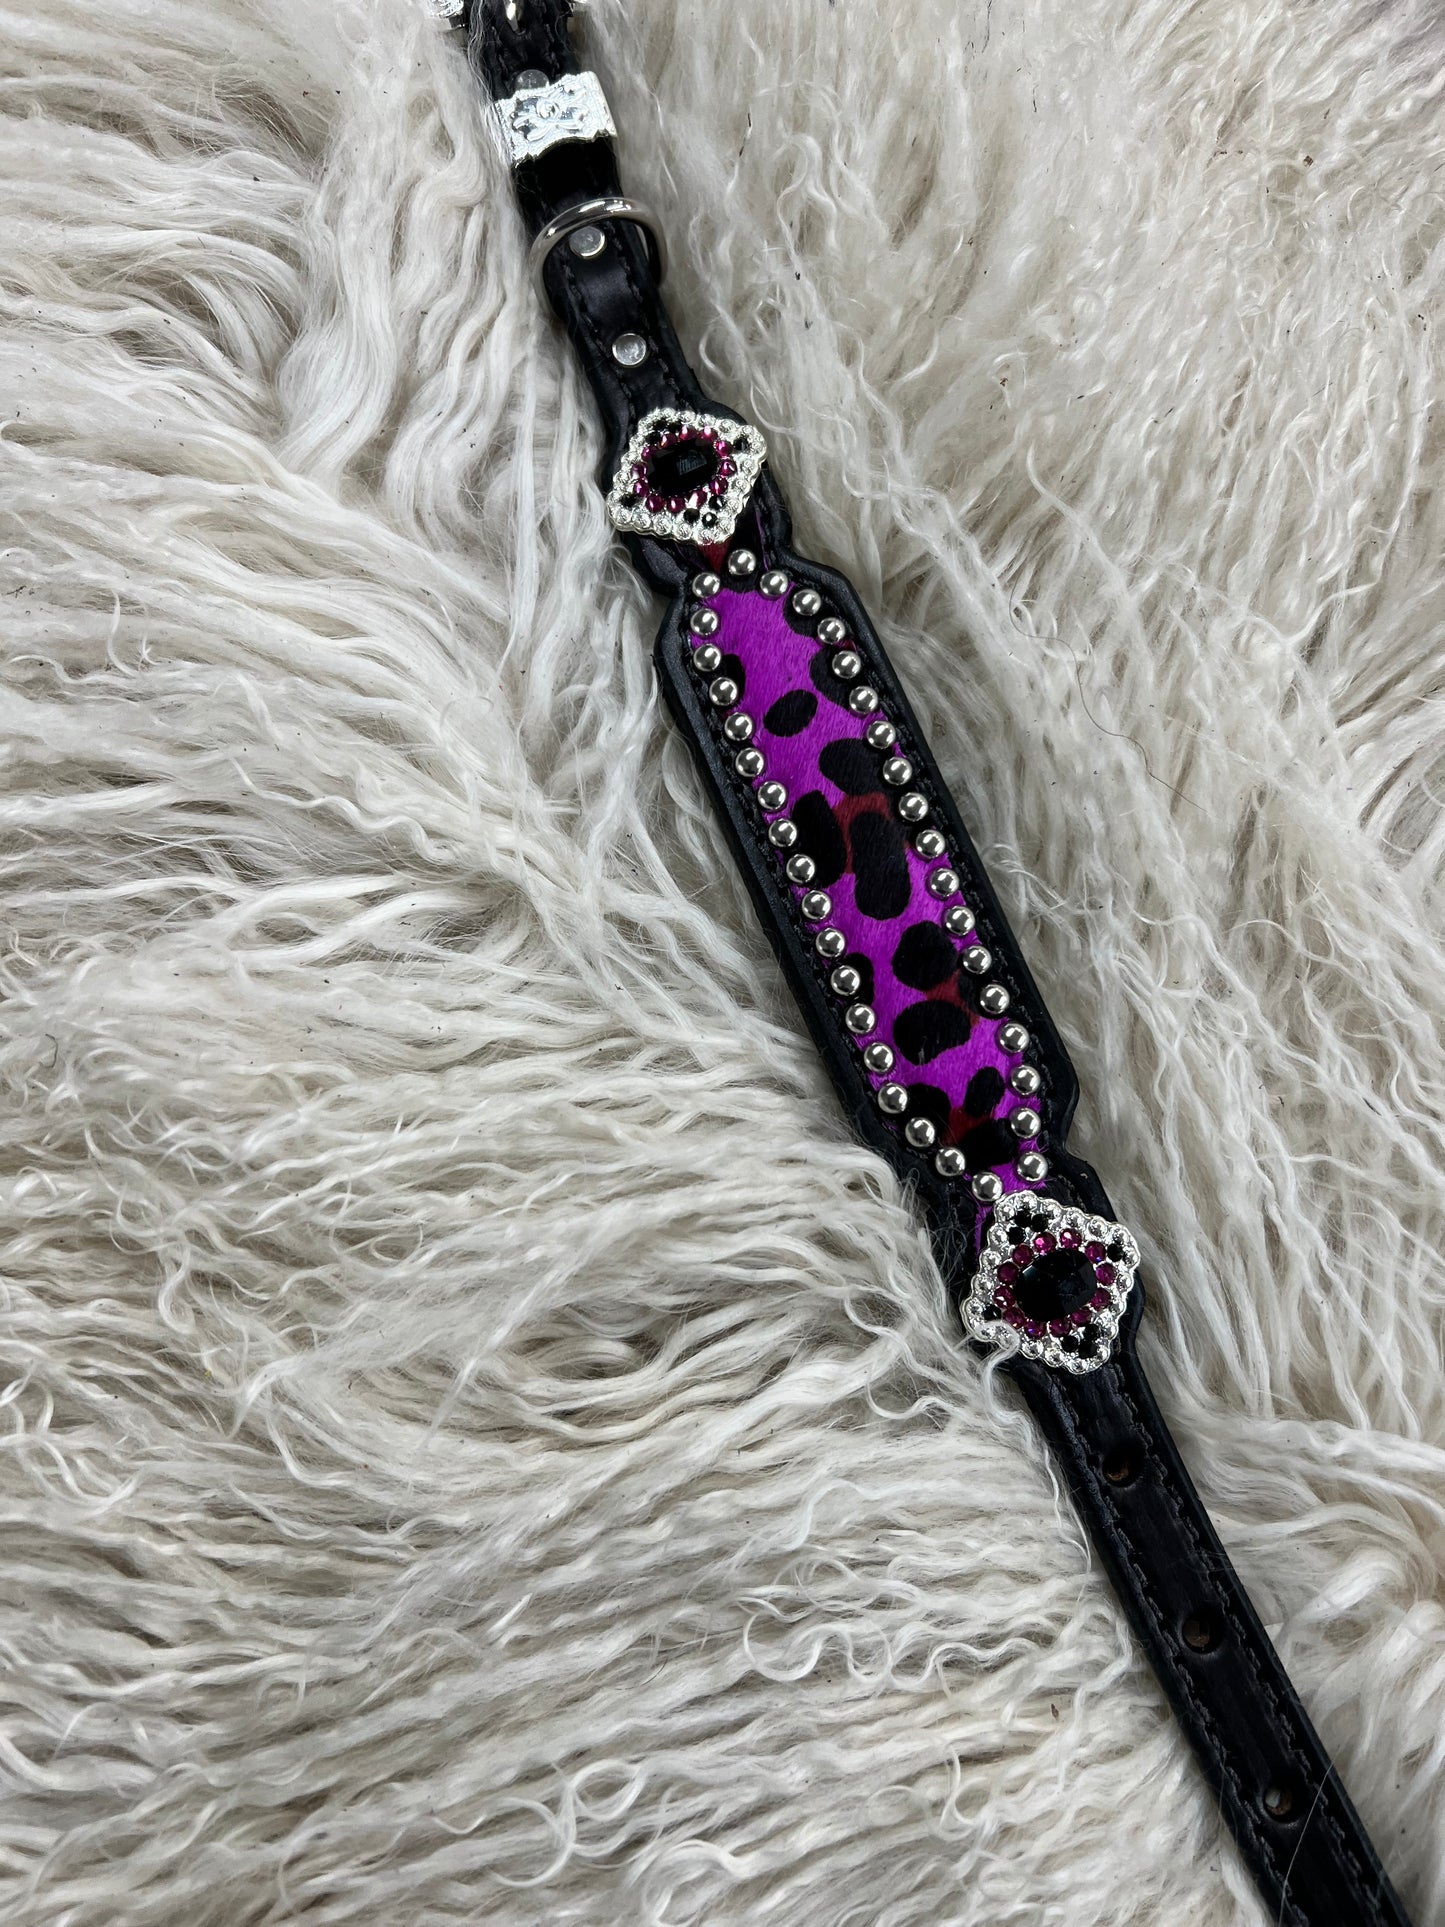 Hot Purple leopard on black leather